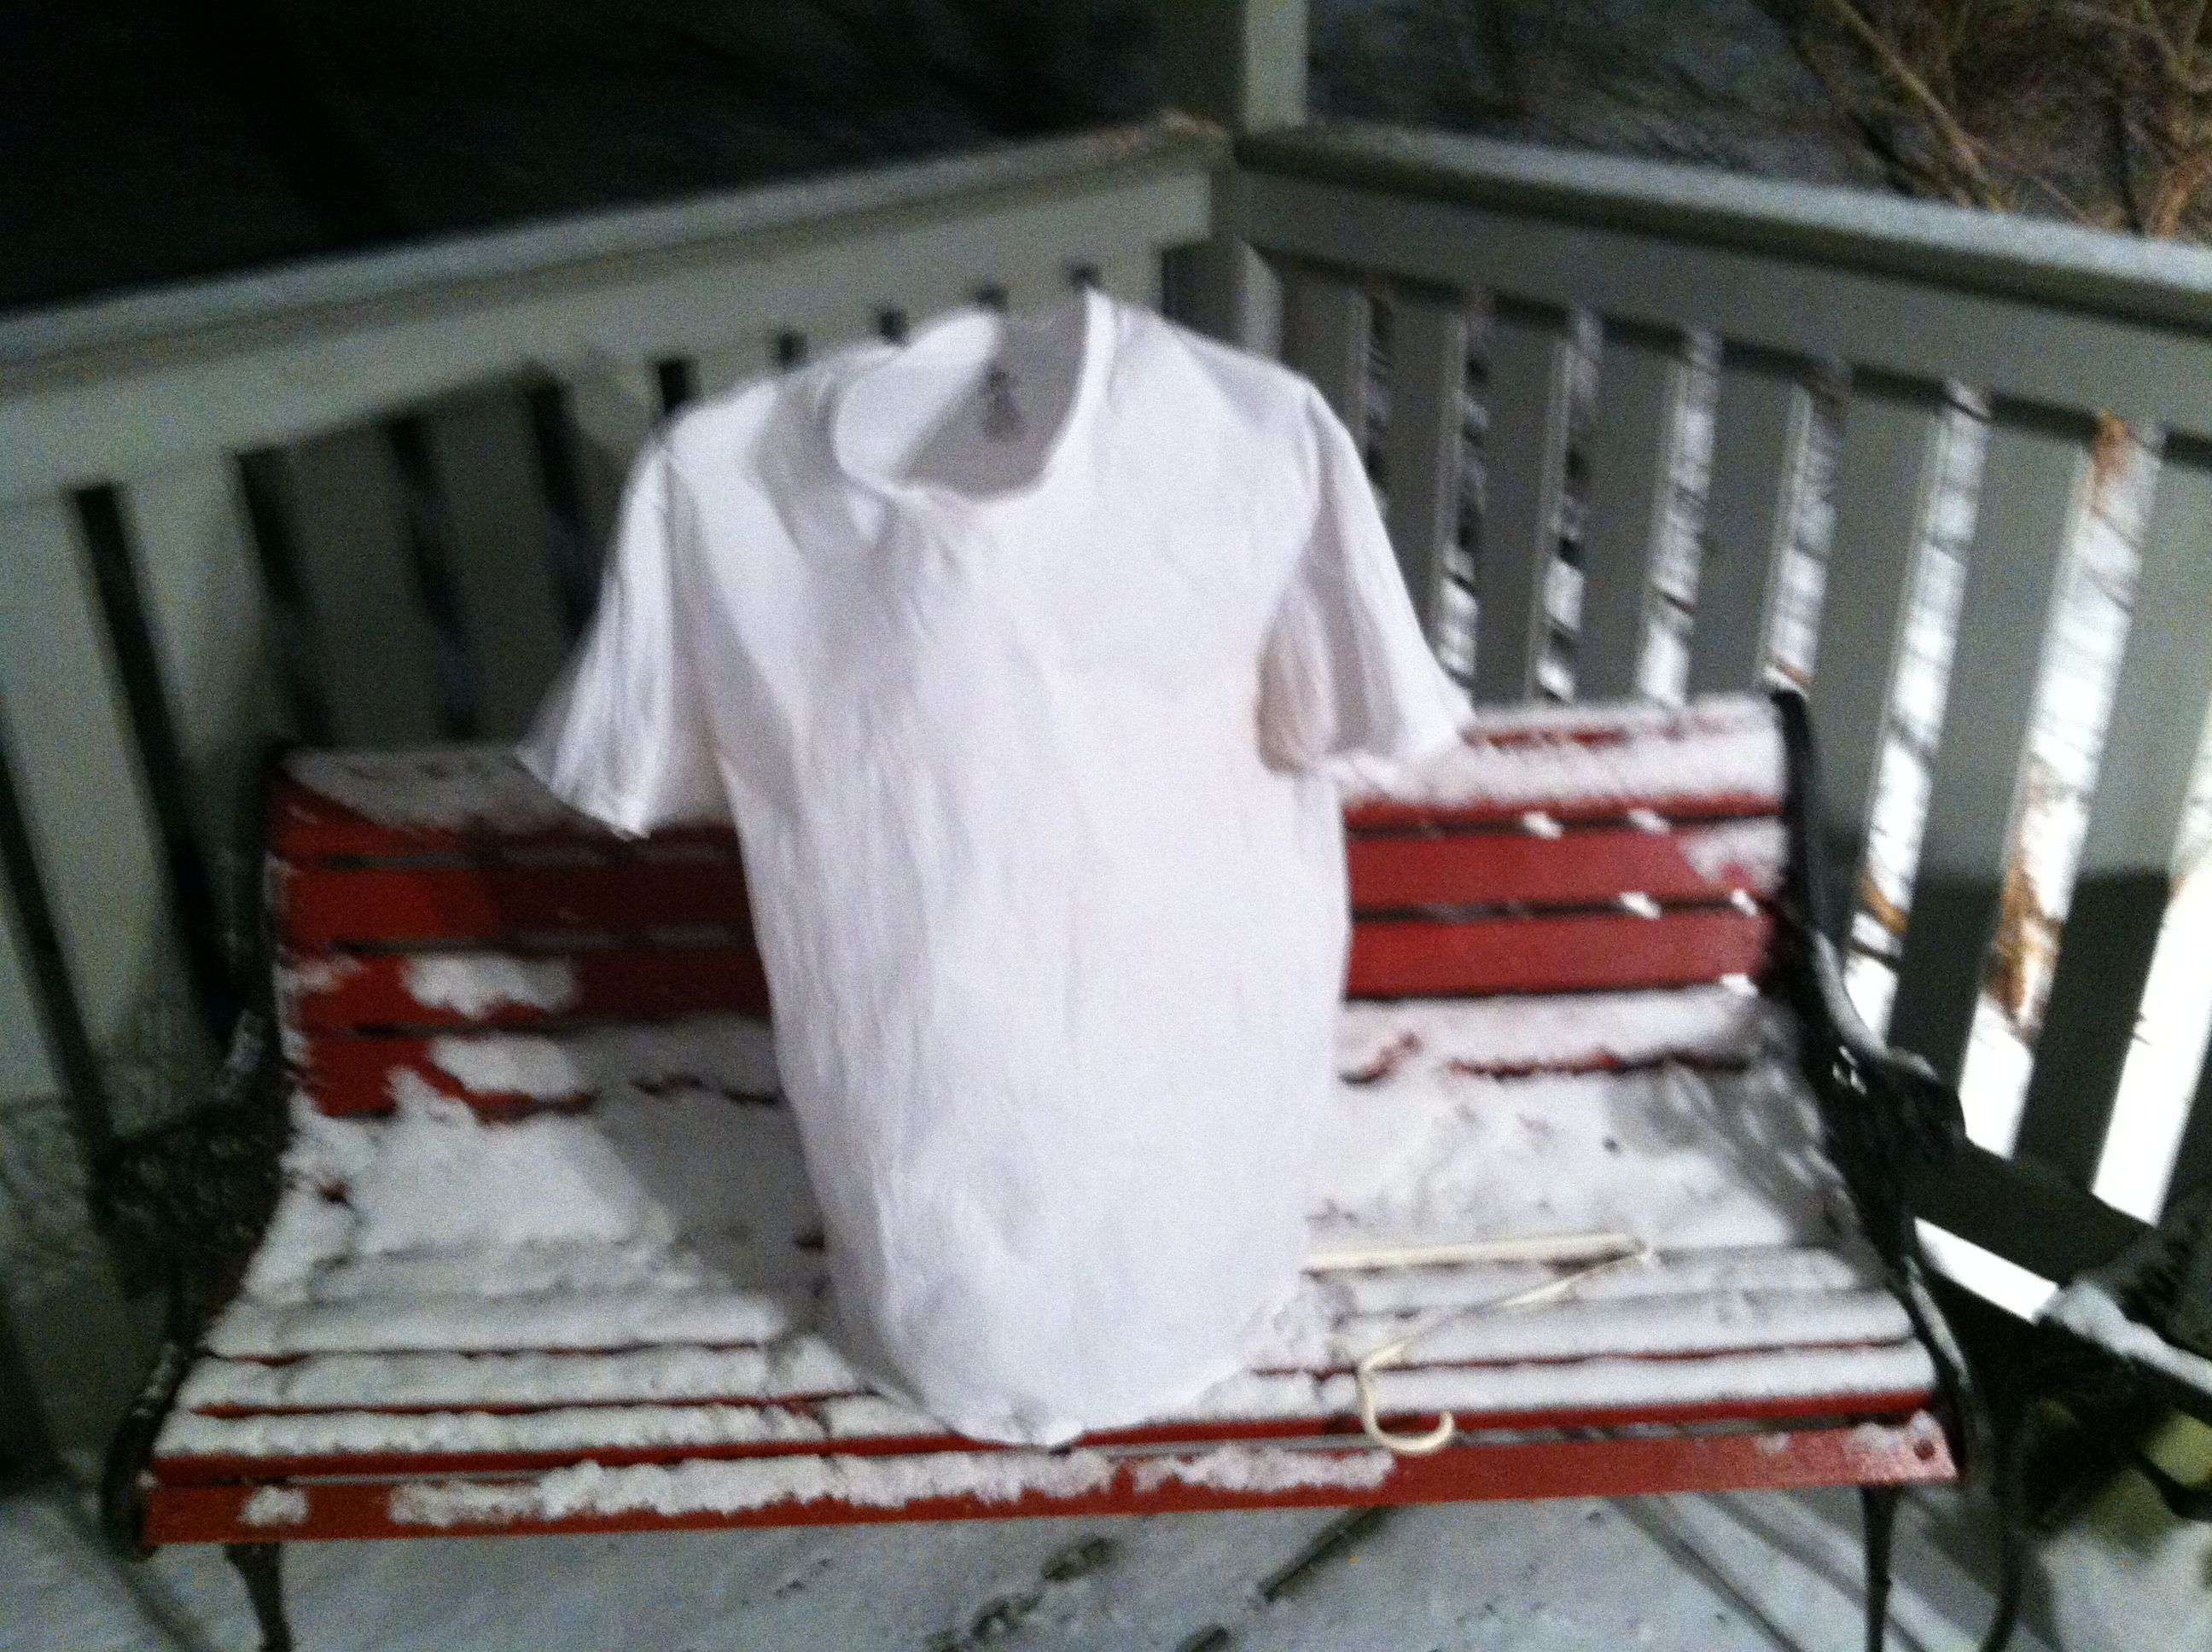 I decided to freeze a Hanes white shirt!